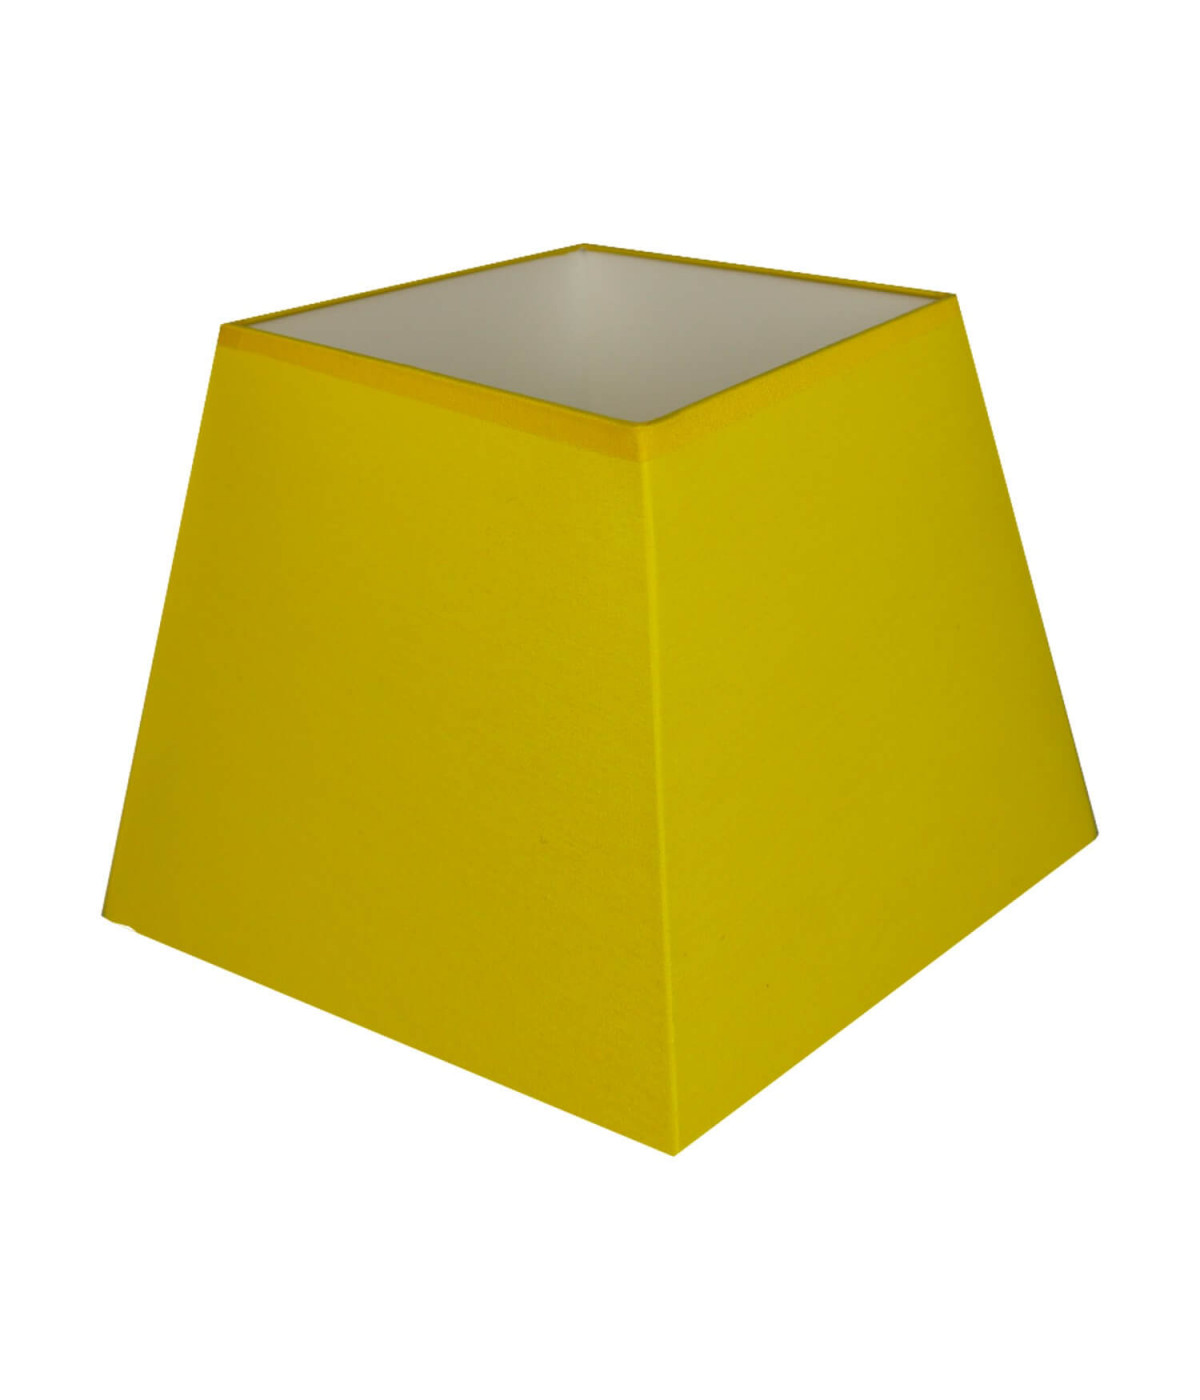 Pantalla de lámpara cuadrada piramidal amarilla